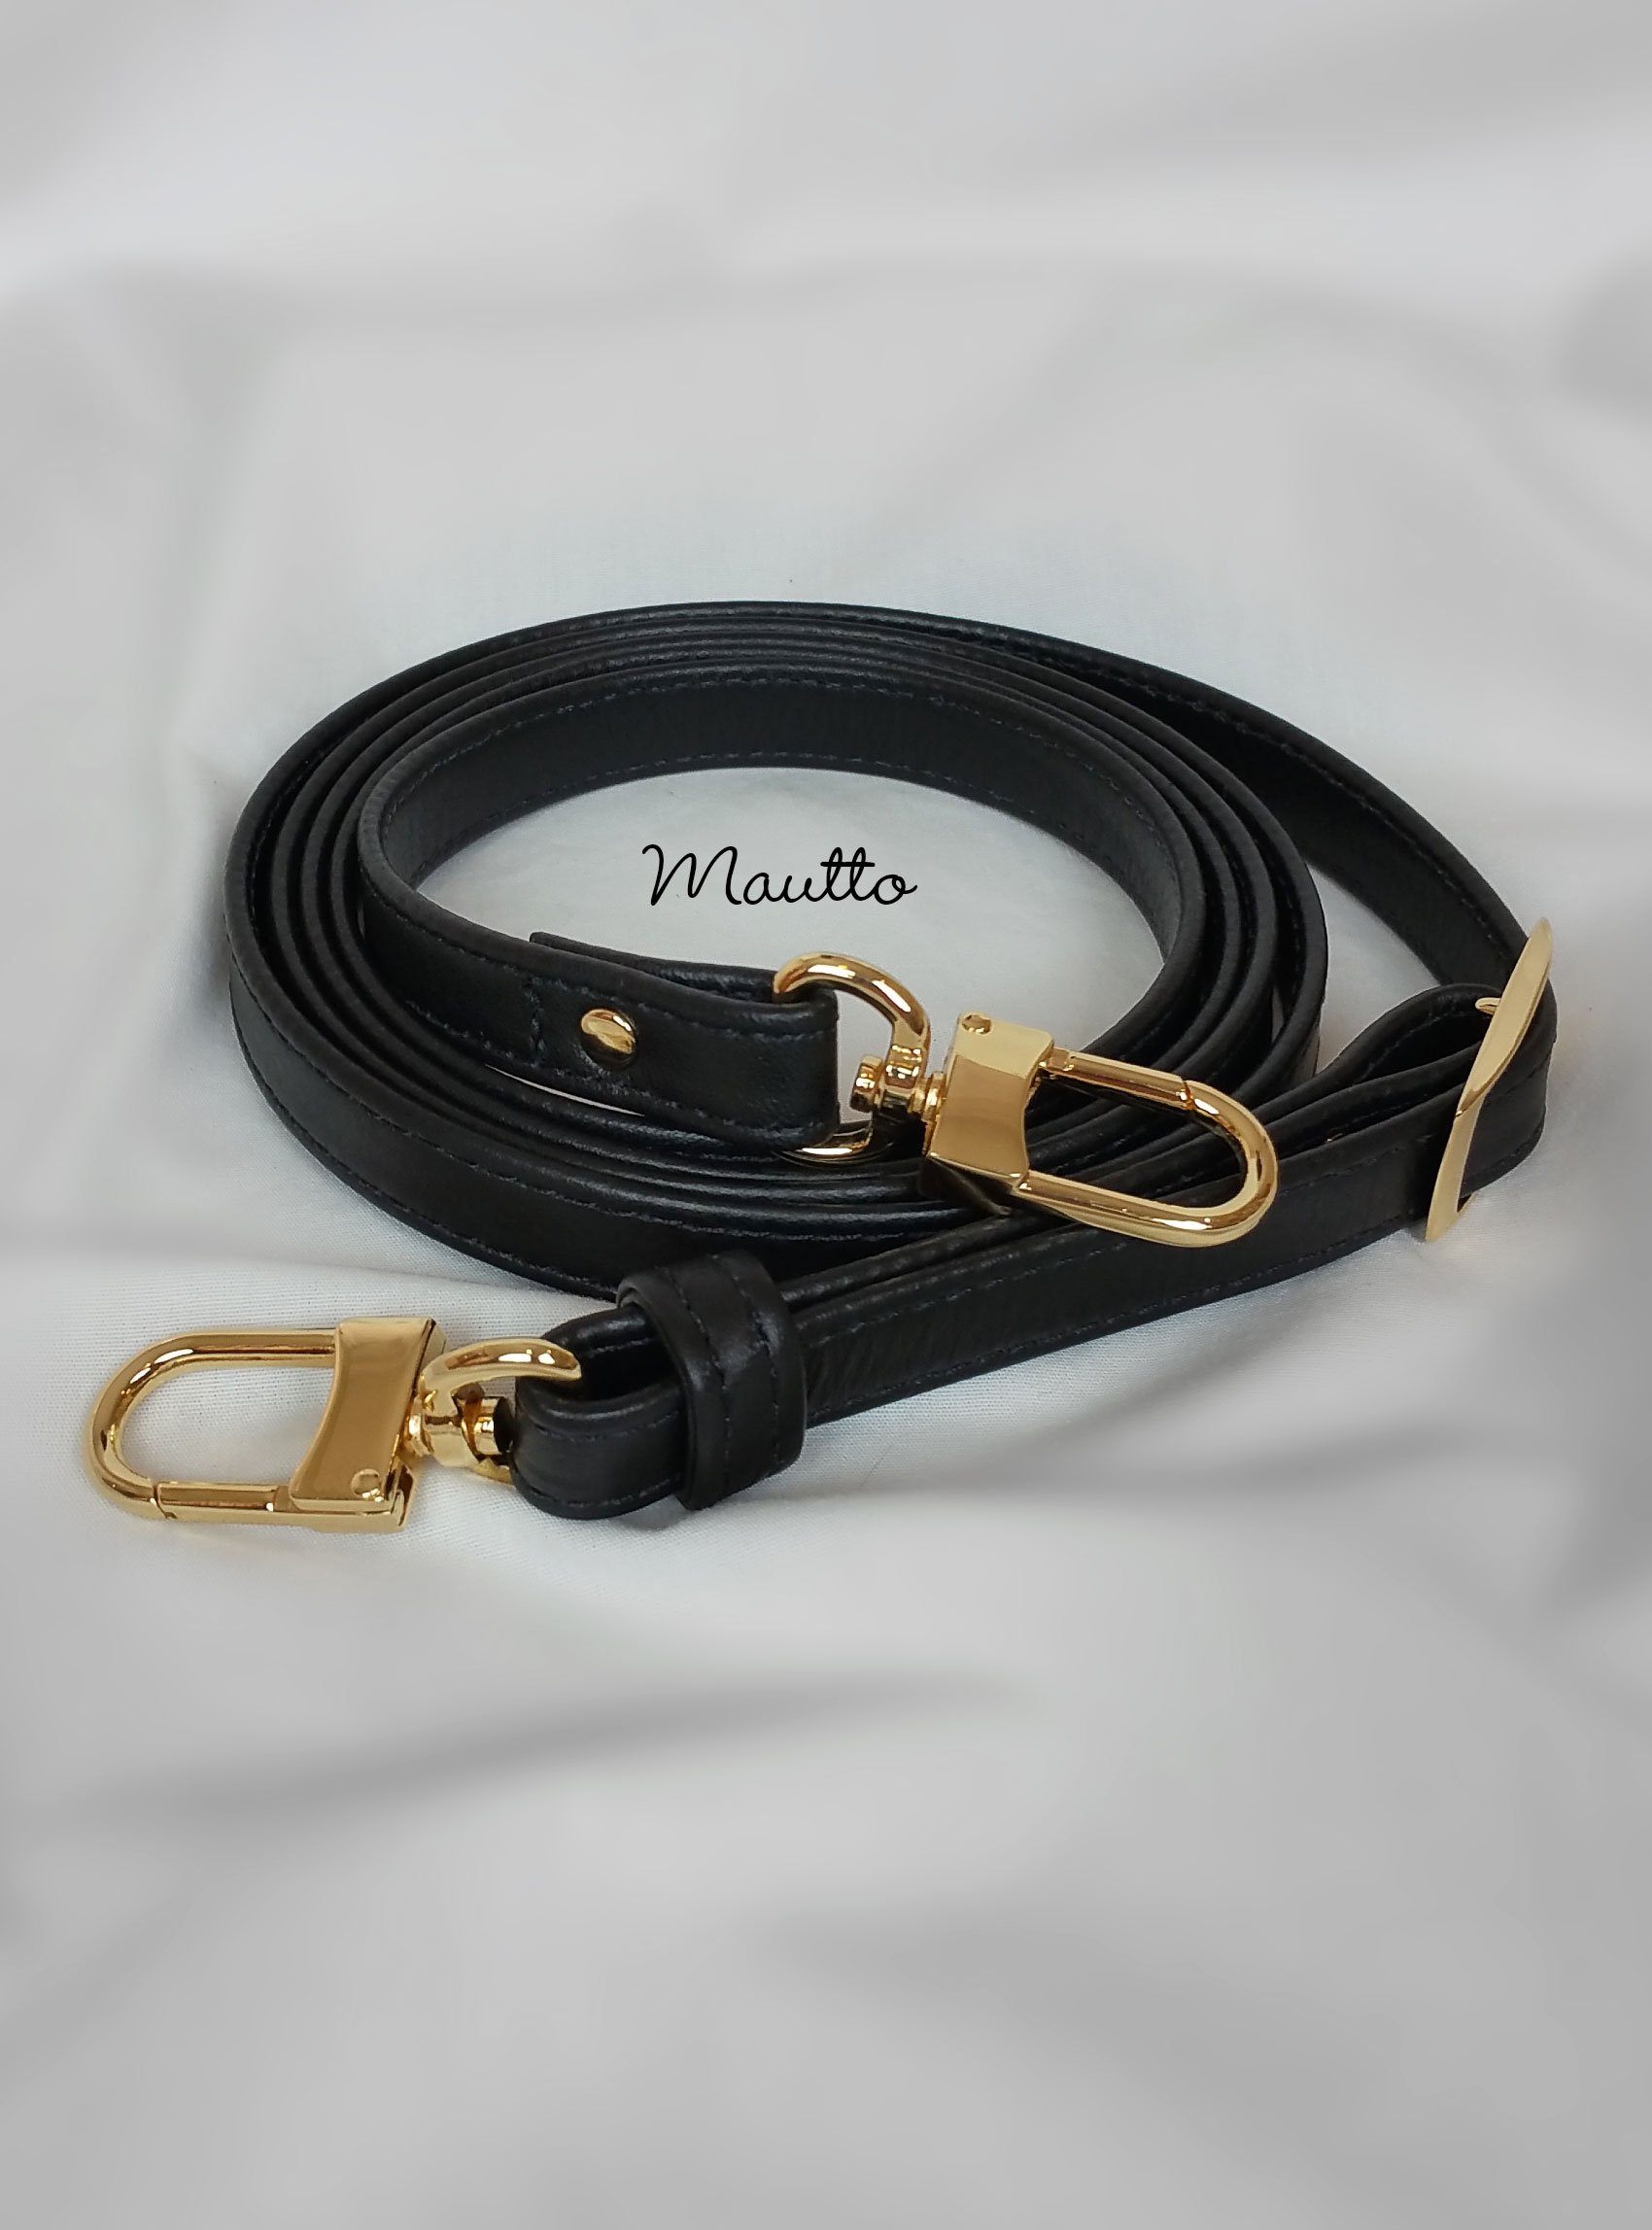 Dark Brown damier Ebene / DE Petite Leather Strap for LV Pochette, Alma,  Eva, Etc 1/2 Inch 13mm Wide Customize Your Length 